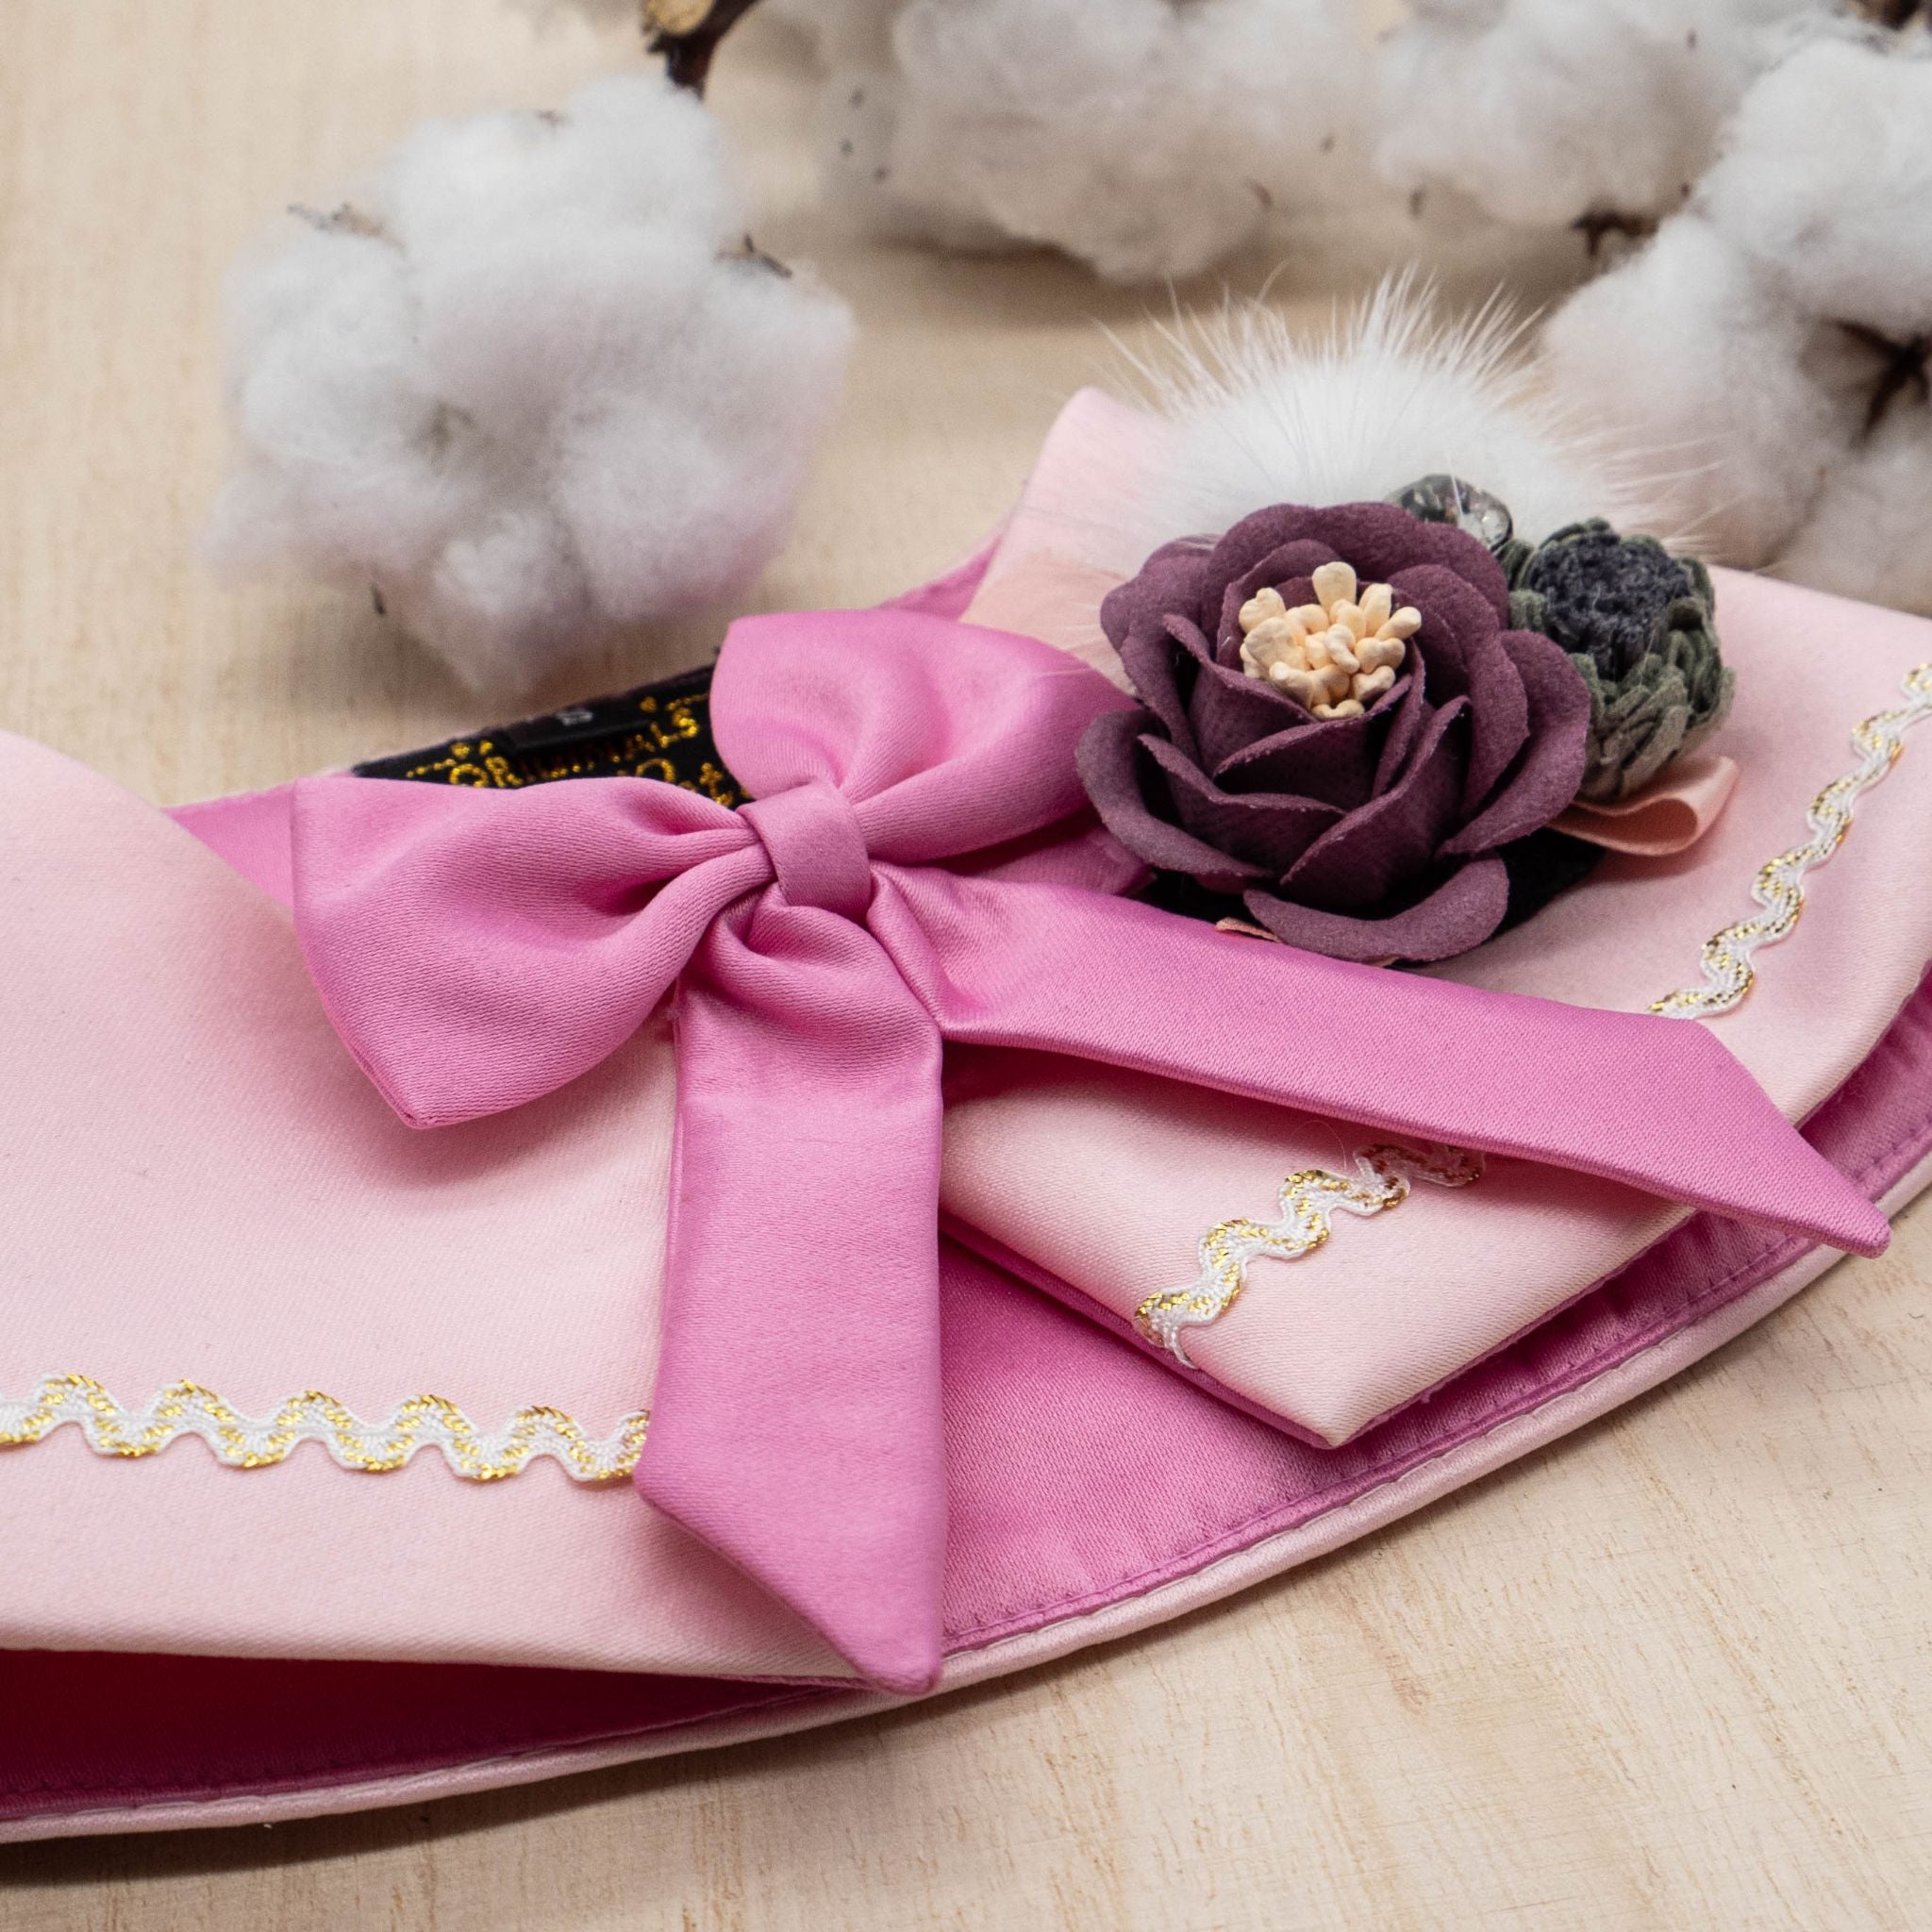 Duchess Capes - Pink Dahlia - The Pet's Couture